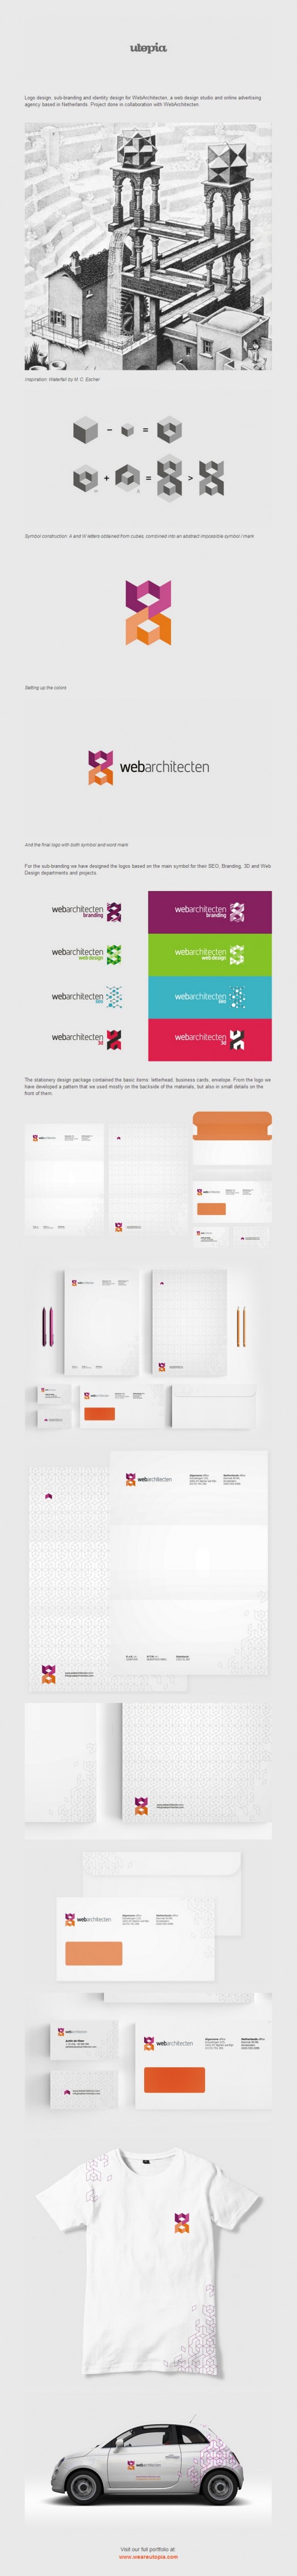 Web Architecten logo and corporate identity design by Utopia Branding Agency 2